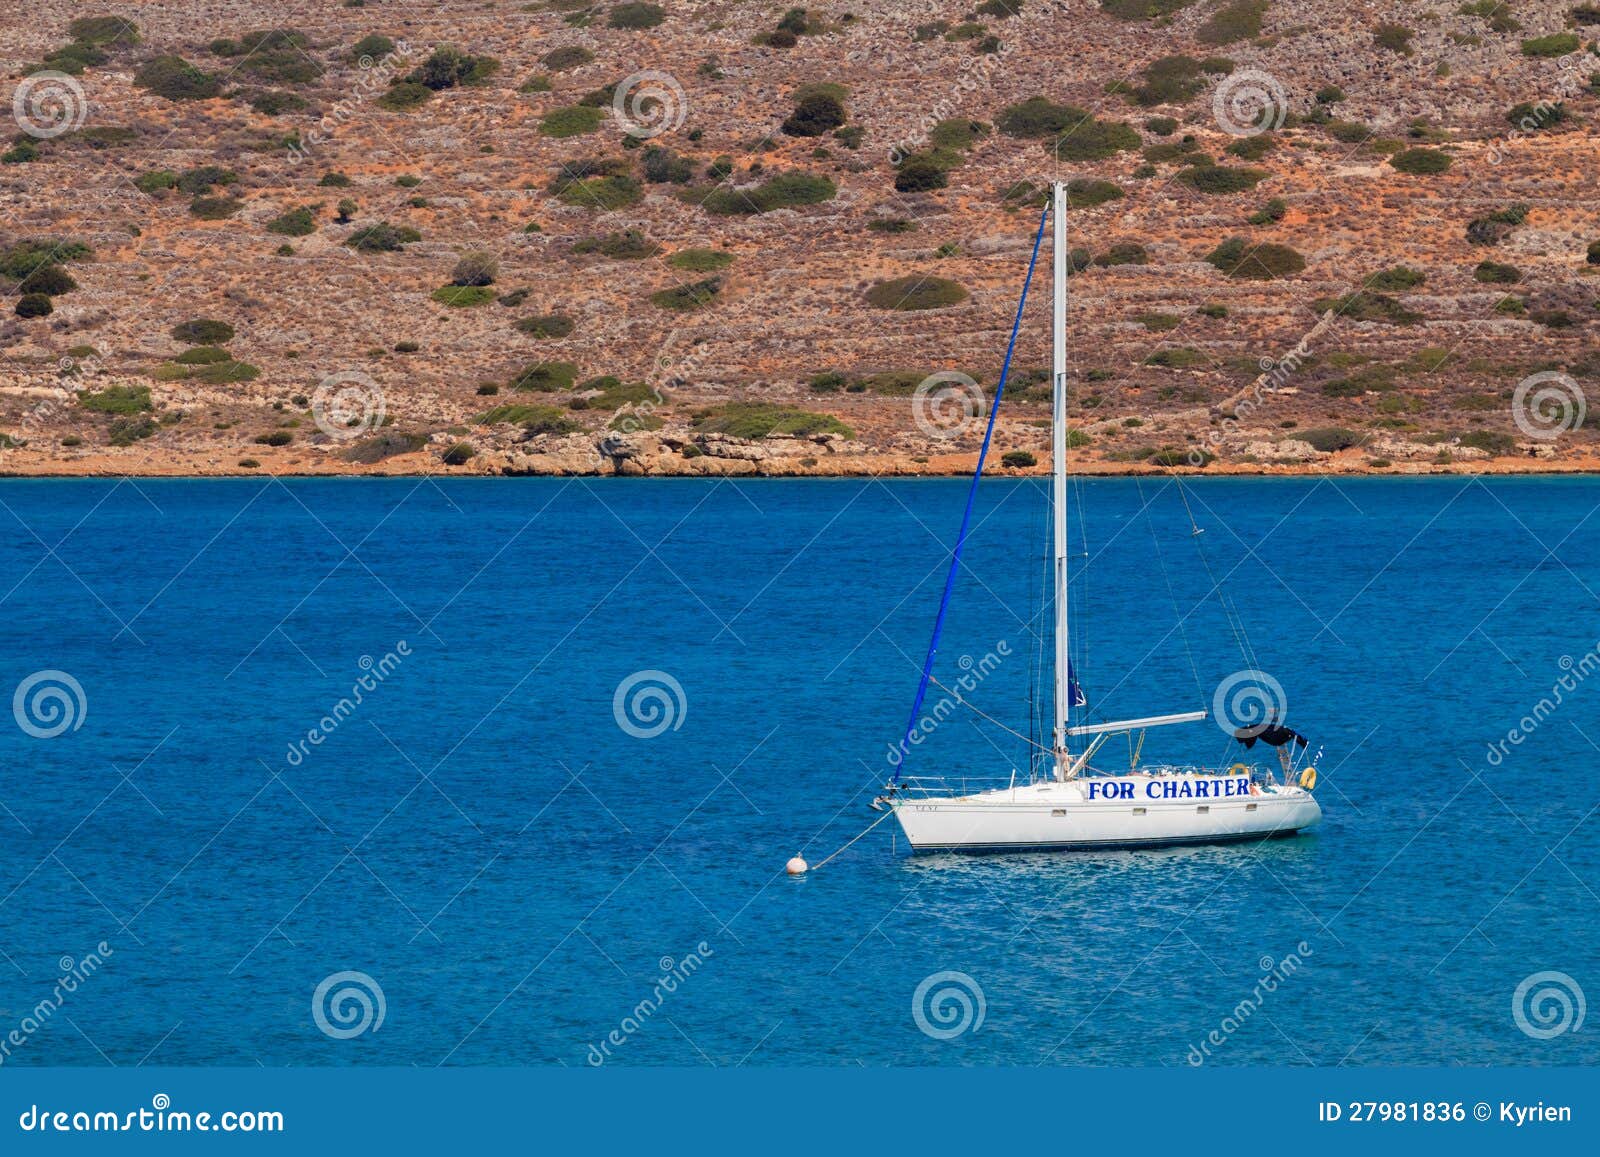 boat for charter in the mediterranean sea, close to Krete, Greece.